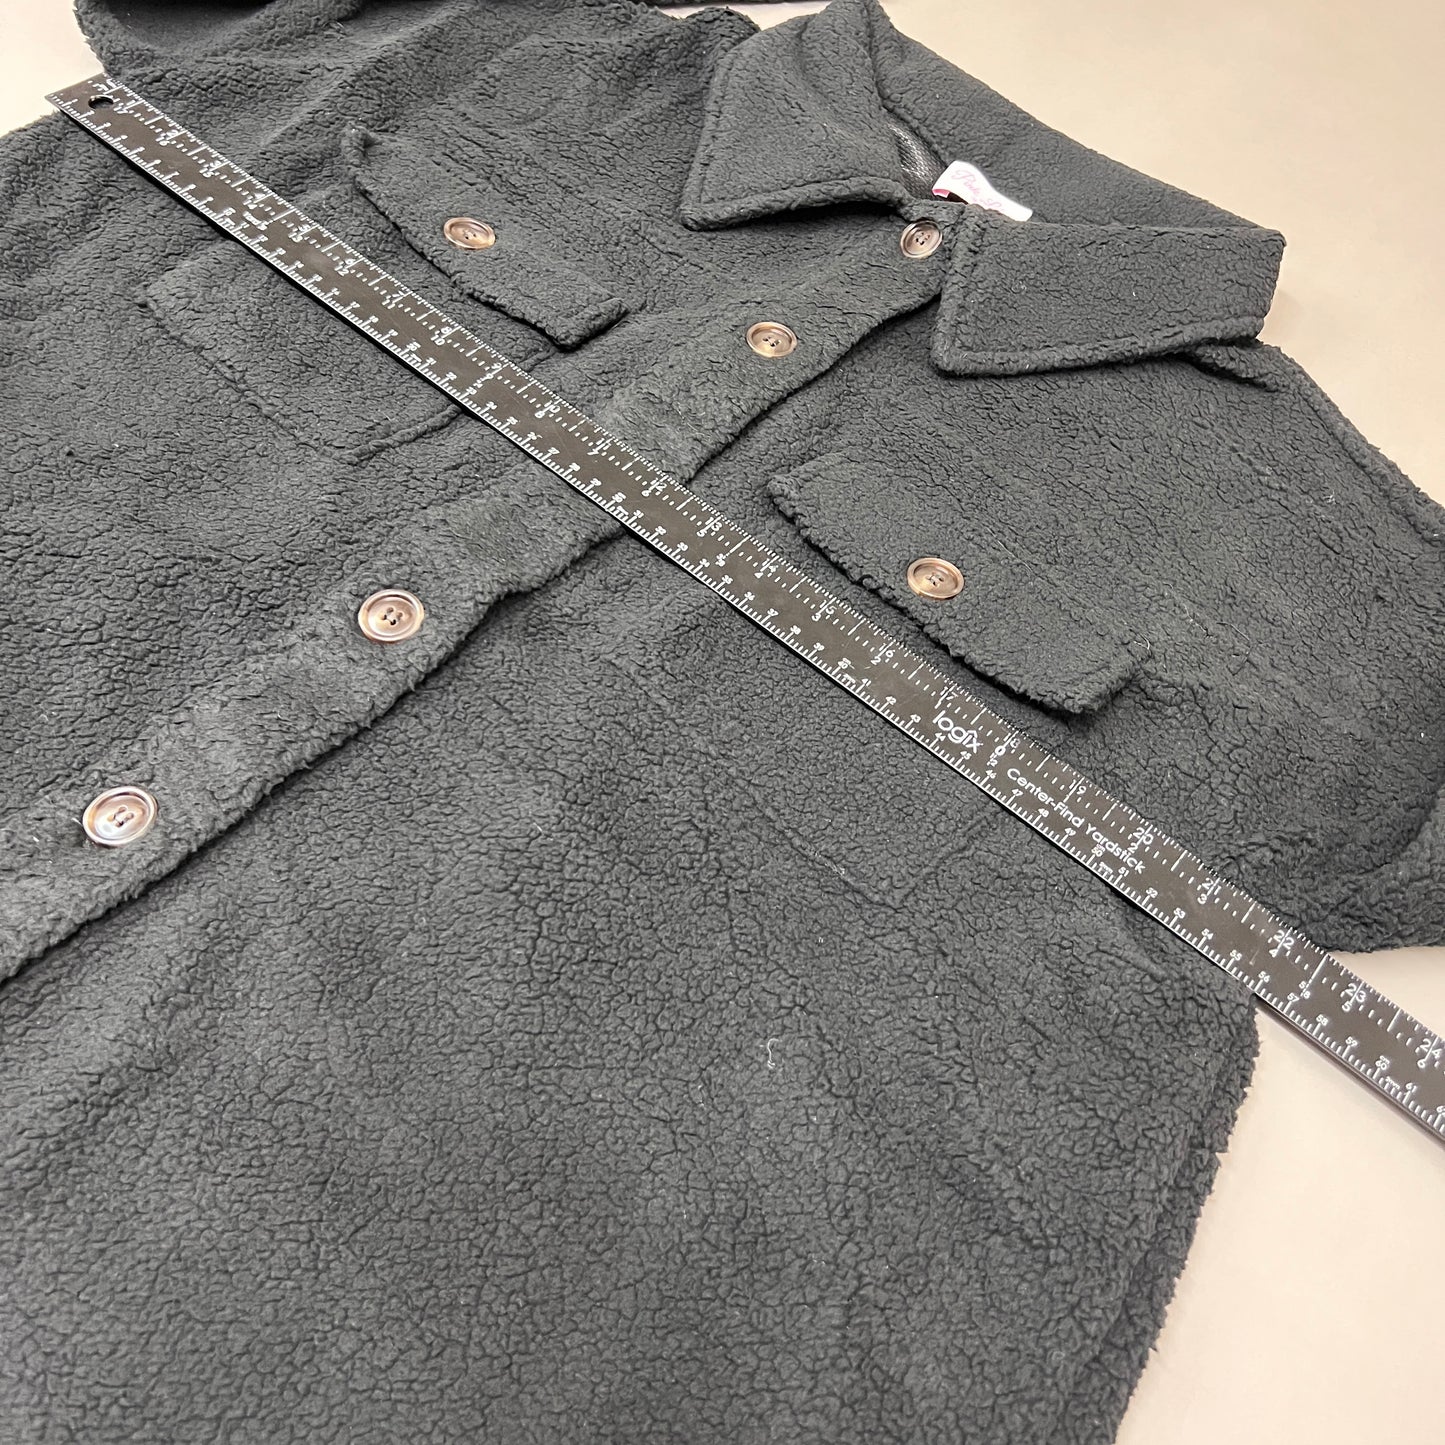 PINK LILY Fleece Button-up Jacket Women's Sz M Black PL177 (New)